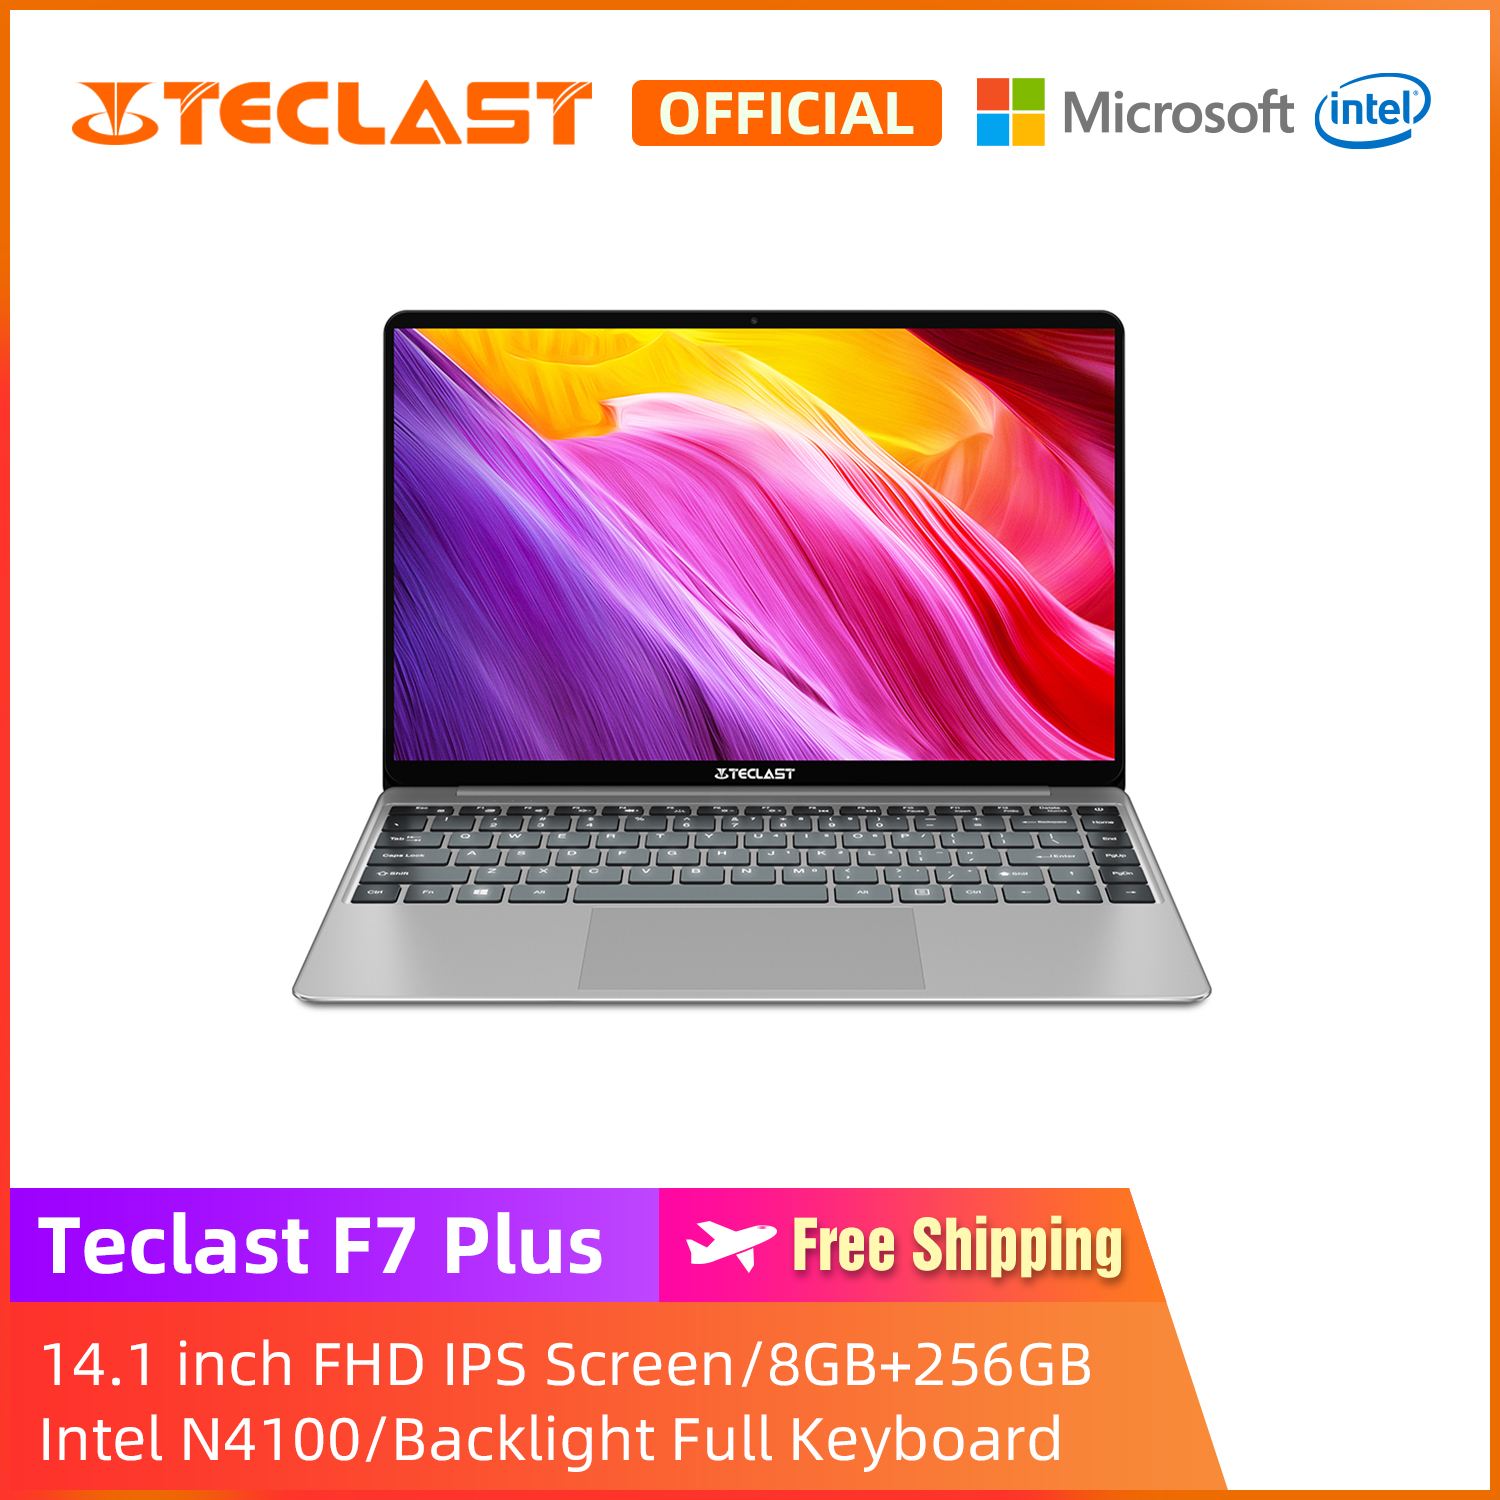 【Teclast Official】F7 Plus Laptop/14.1 inch FHD IPS Screen/Intel Gemini Lake N4100 CPU/Windows 10/8GB RAM+256GB SSD/Dual Band WiFi